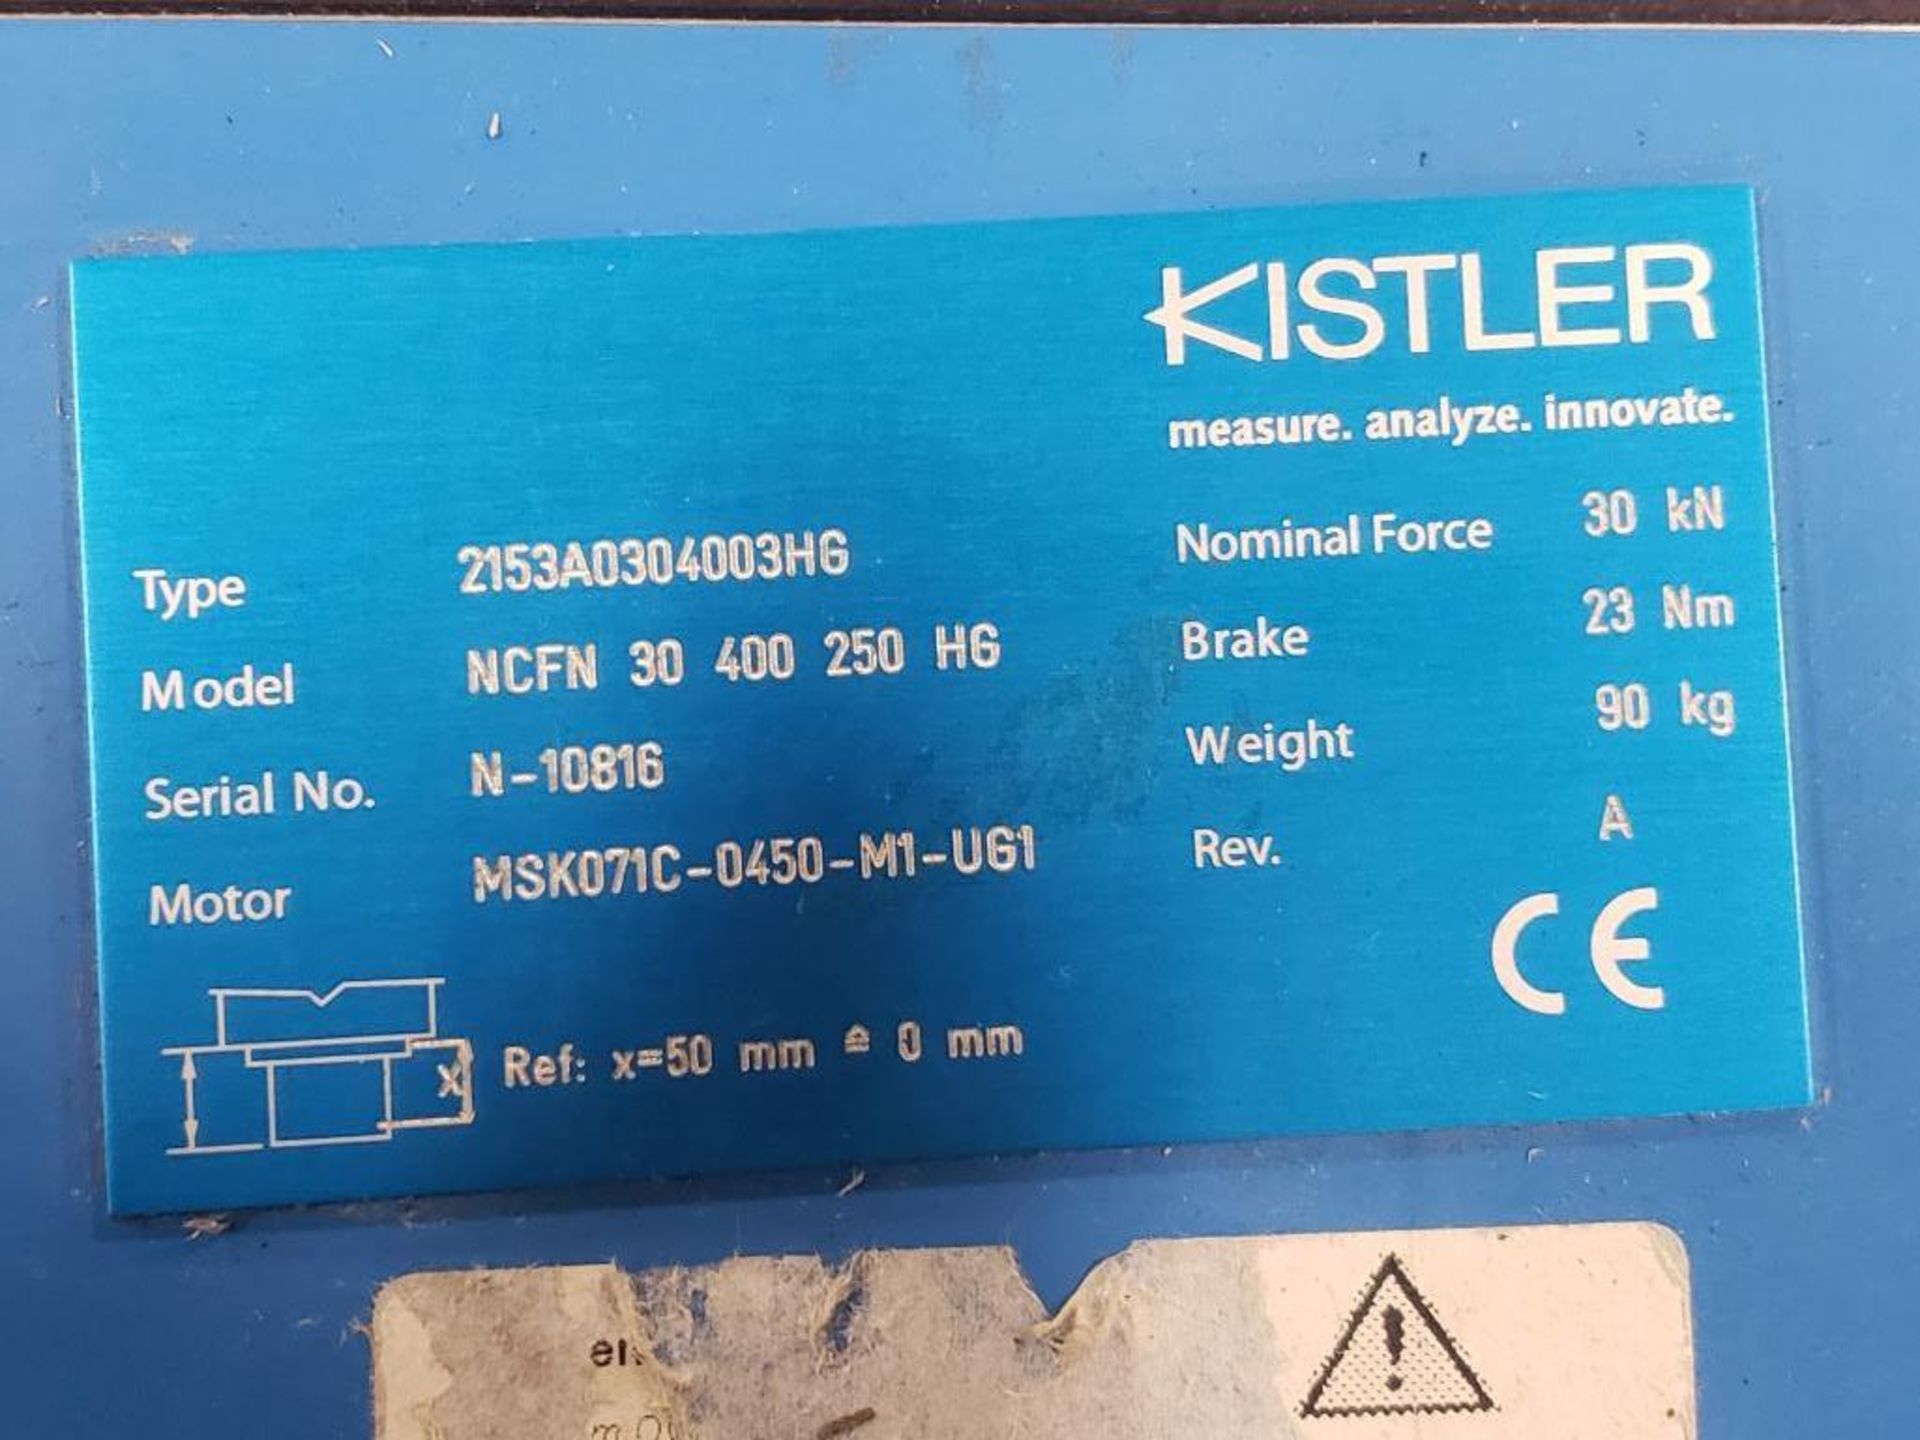 Kistler strain gage coupling. Type 2153A0304003HG. Model NCFN-30-400-250-HG. - Image 2 of 5